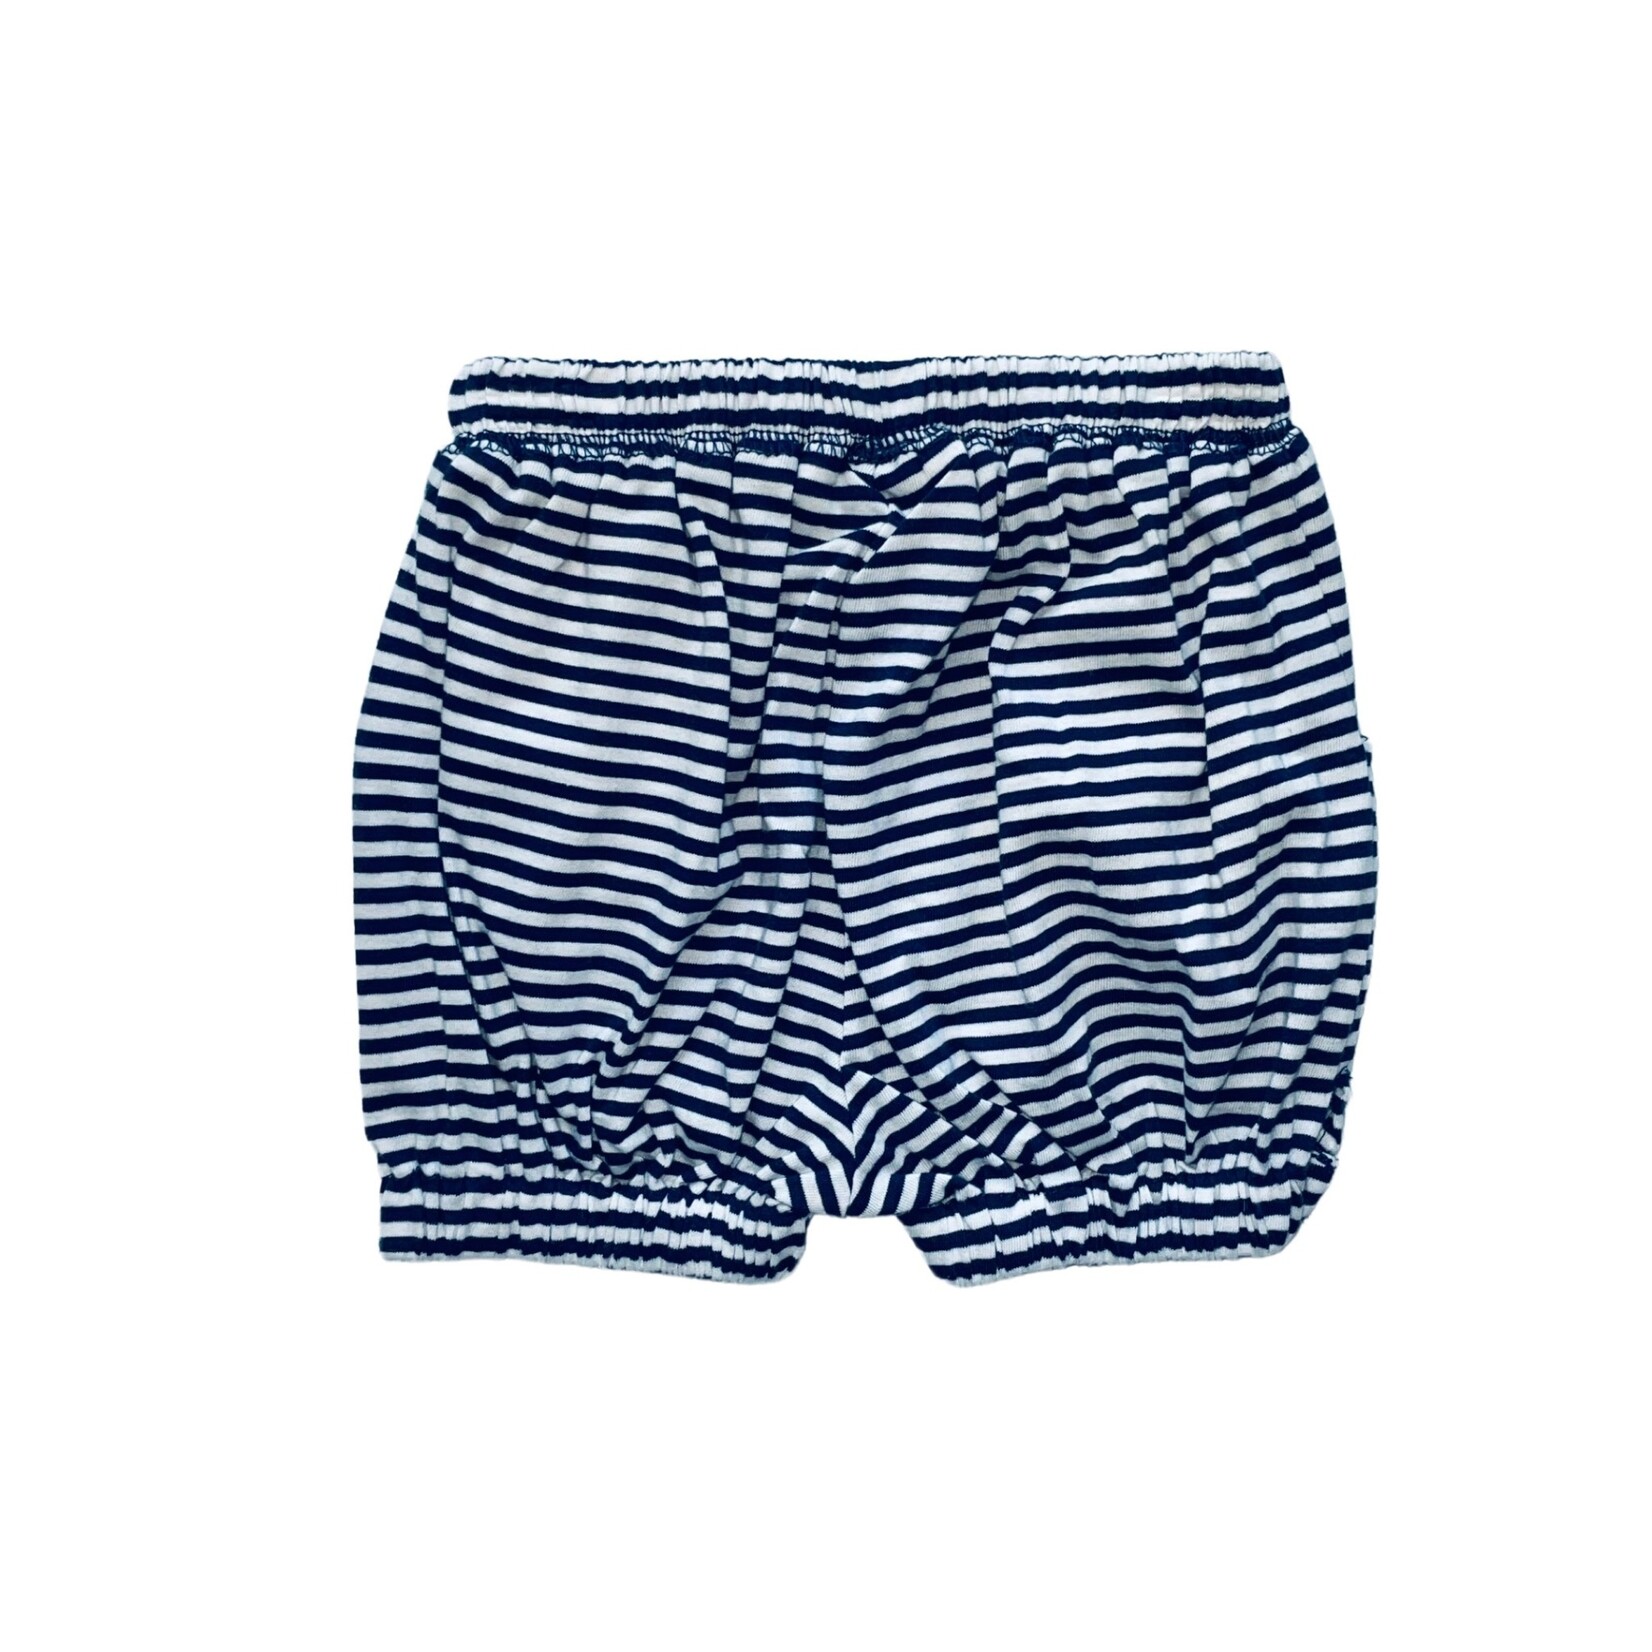 Ralph Lauren Royal Jersey Stripe Shorts